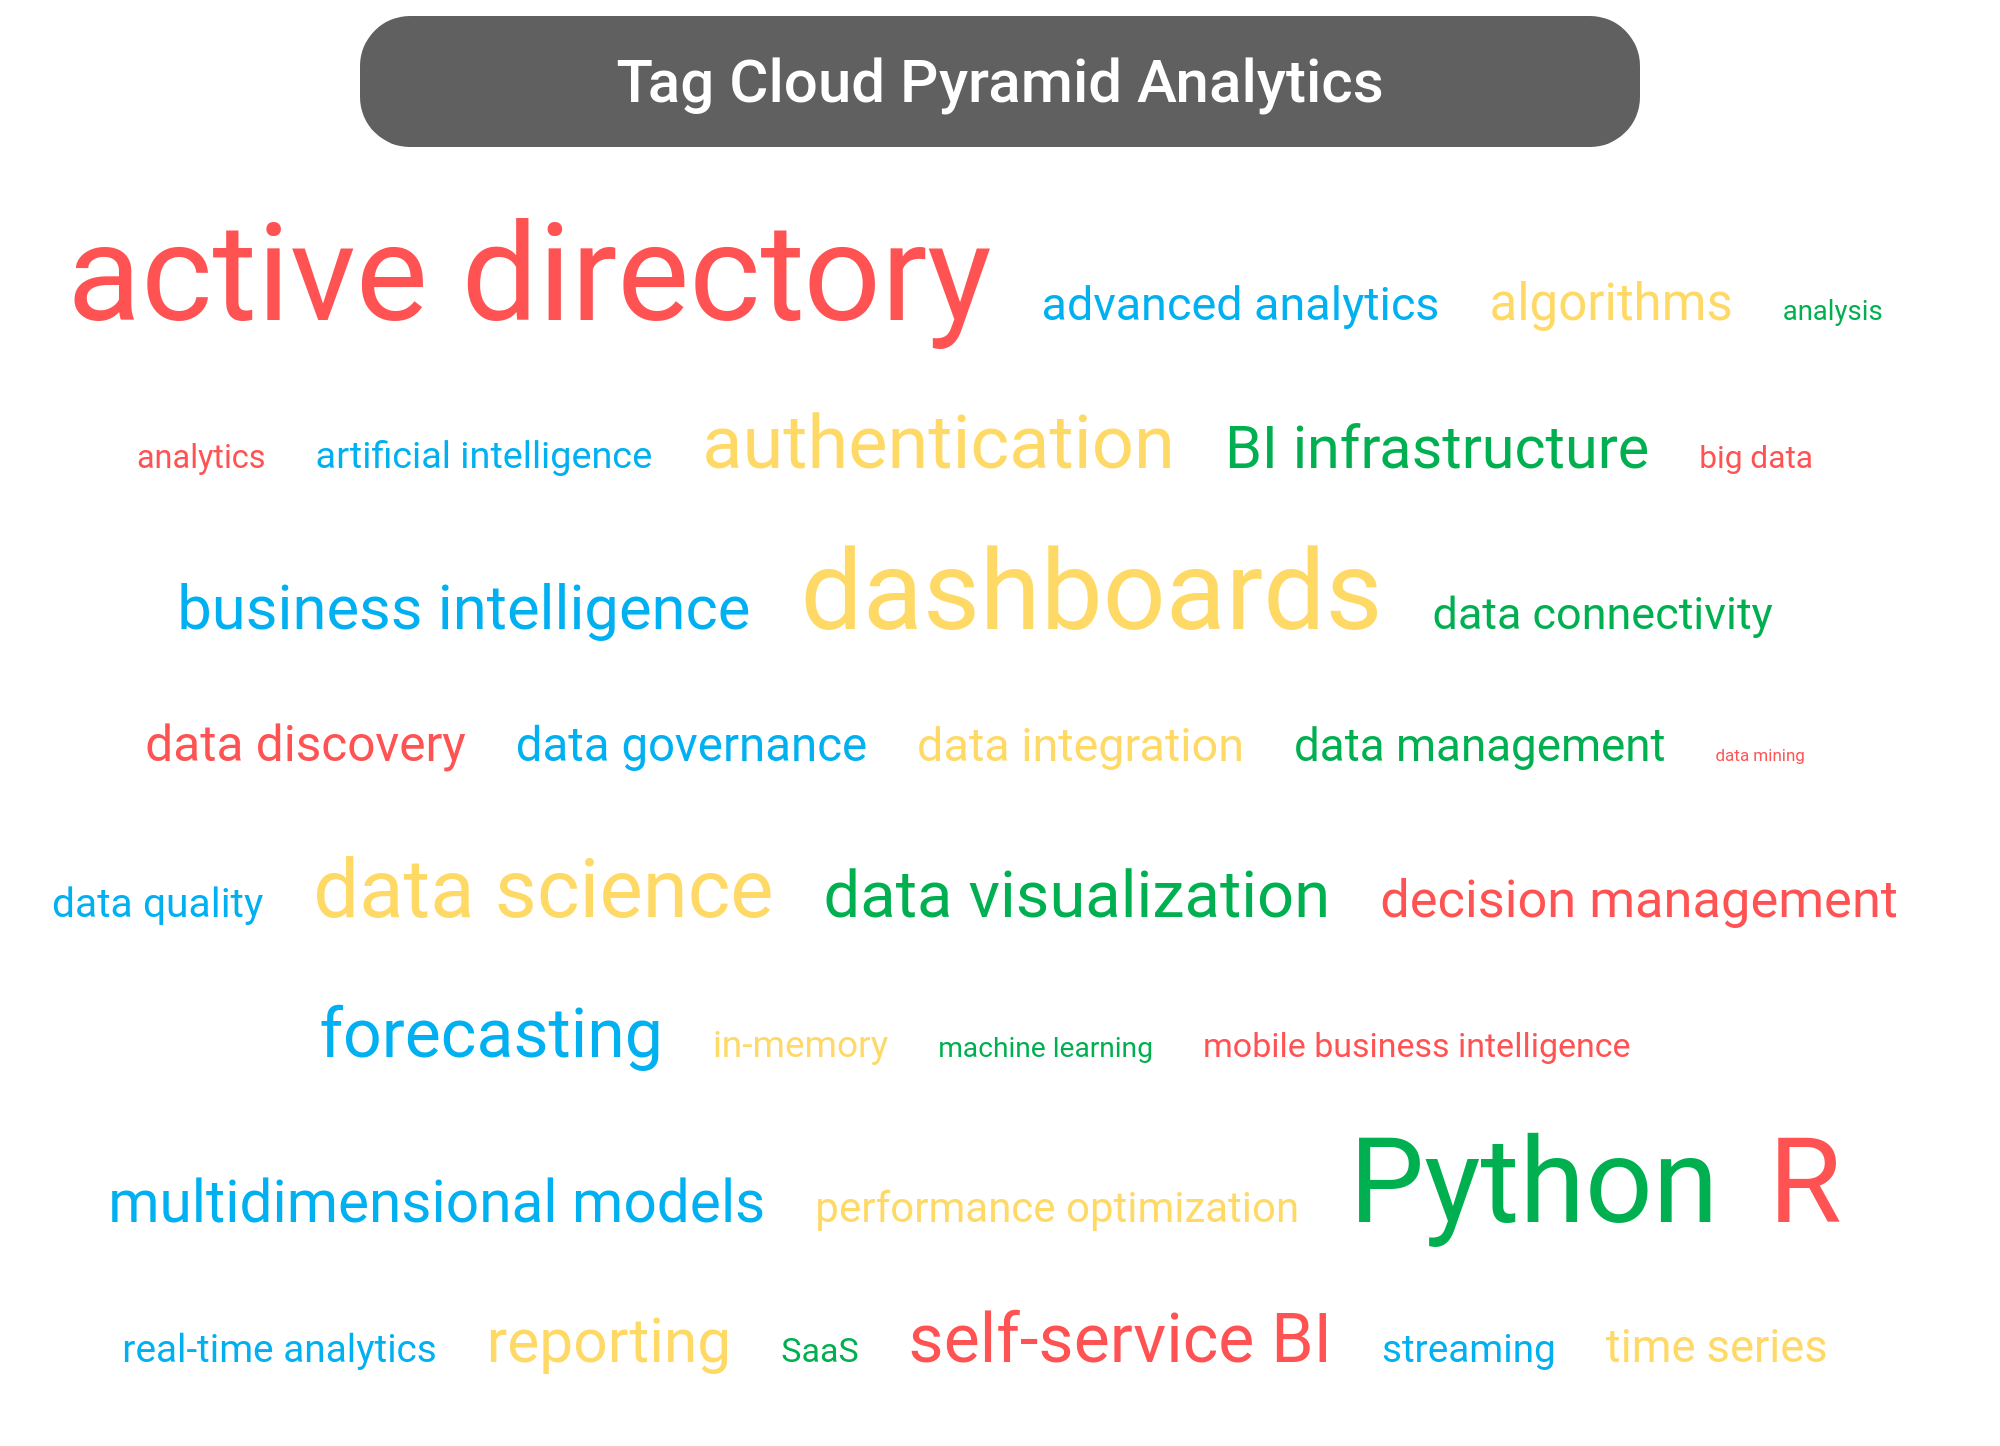 Tag cloud of the Pyramid Analytics tools.